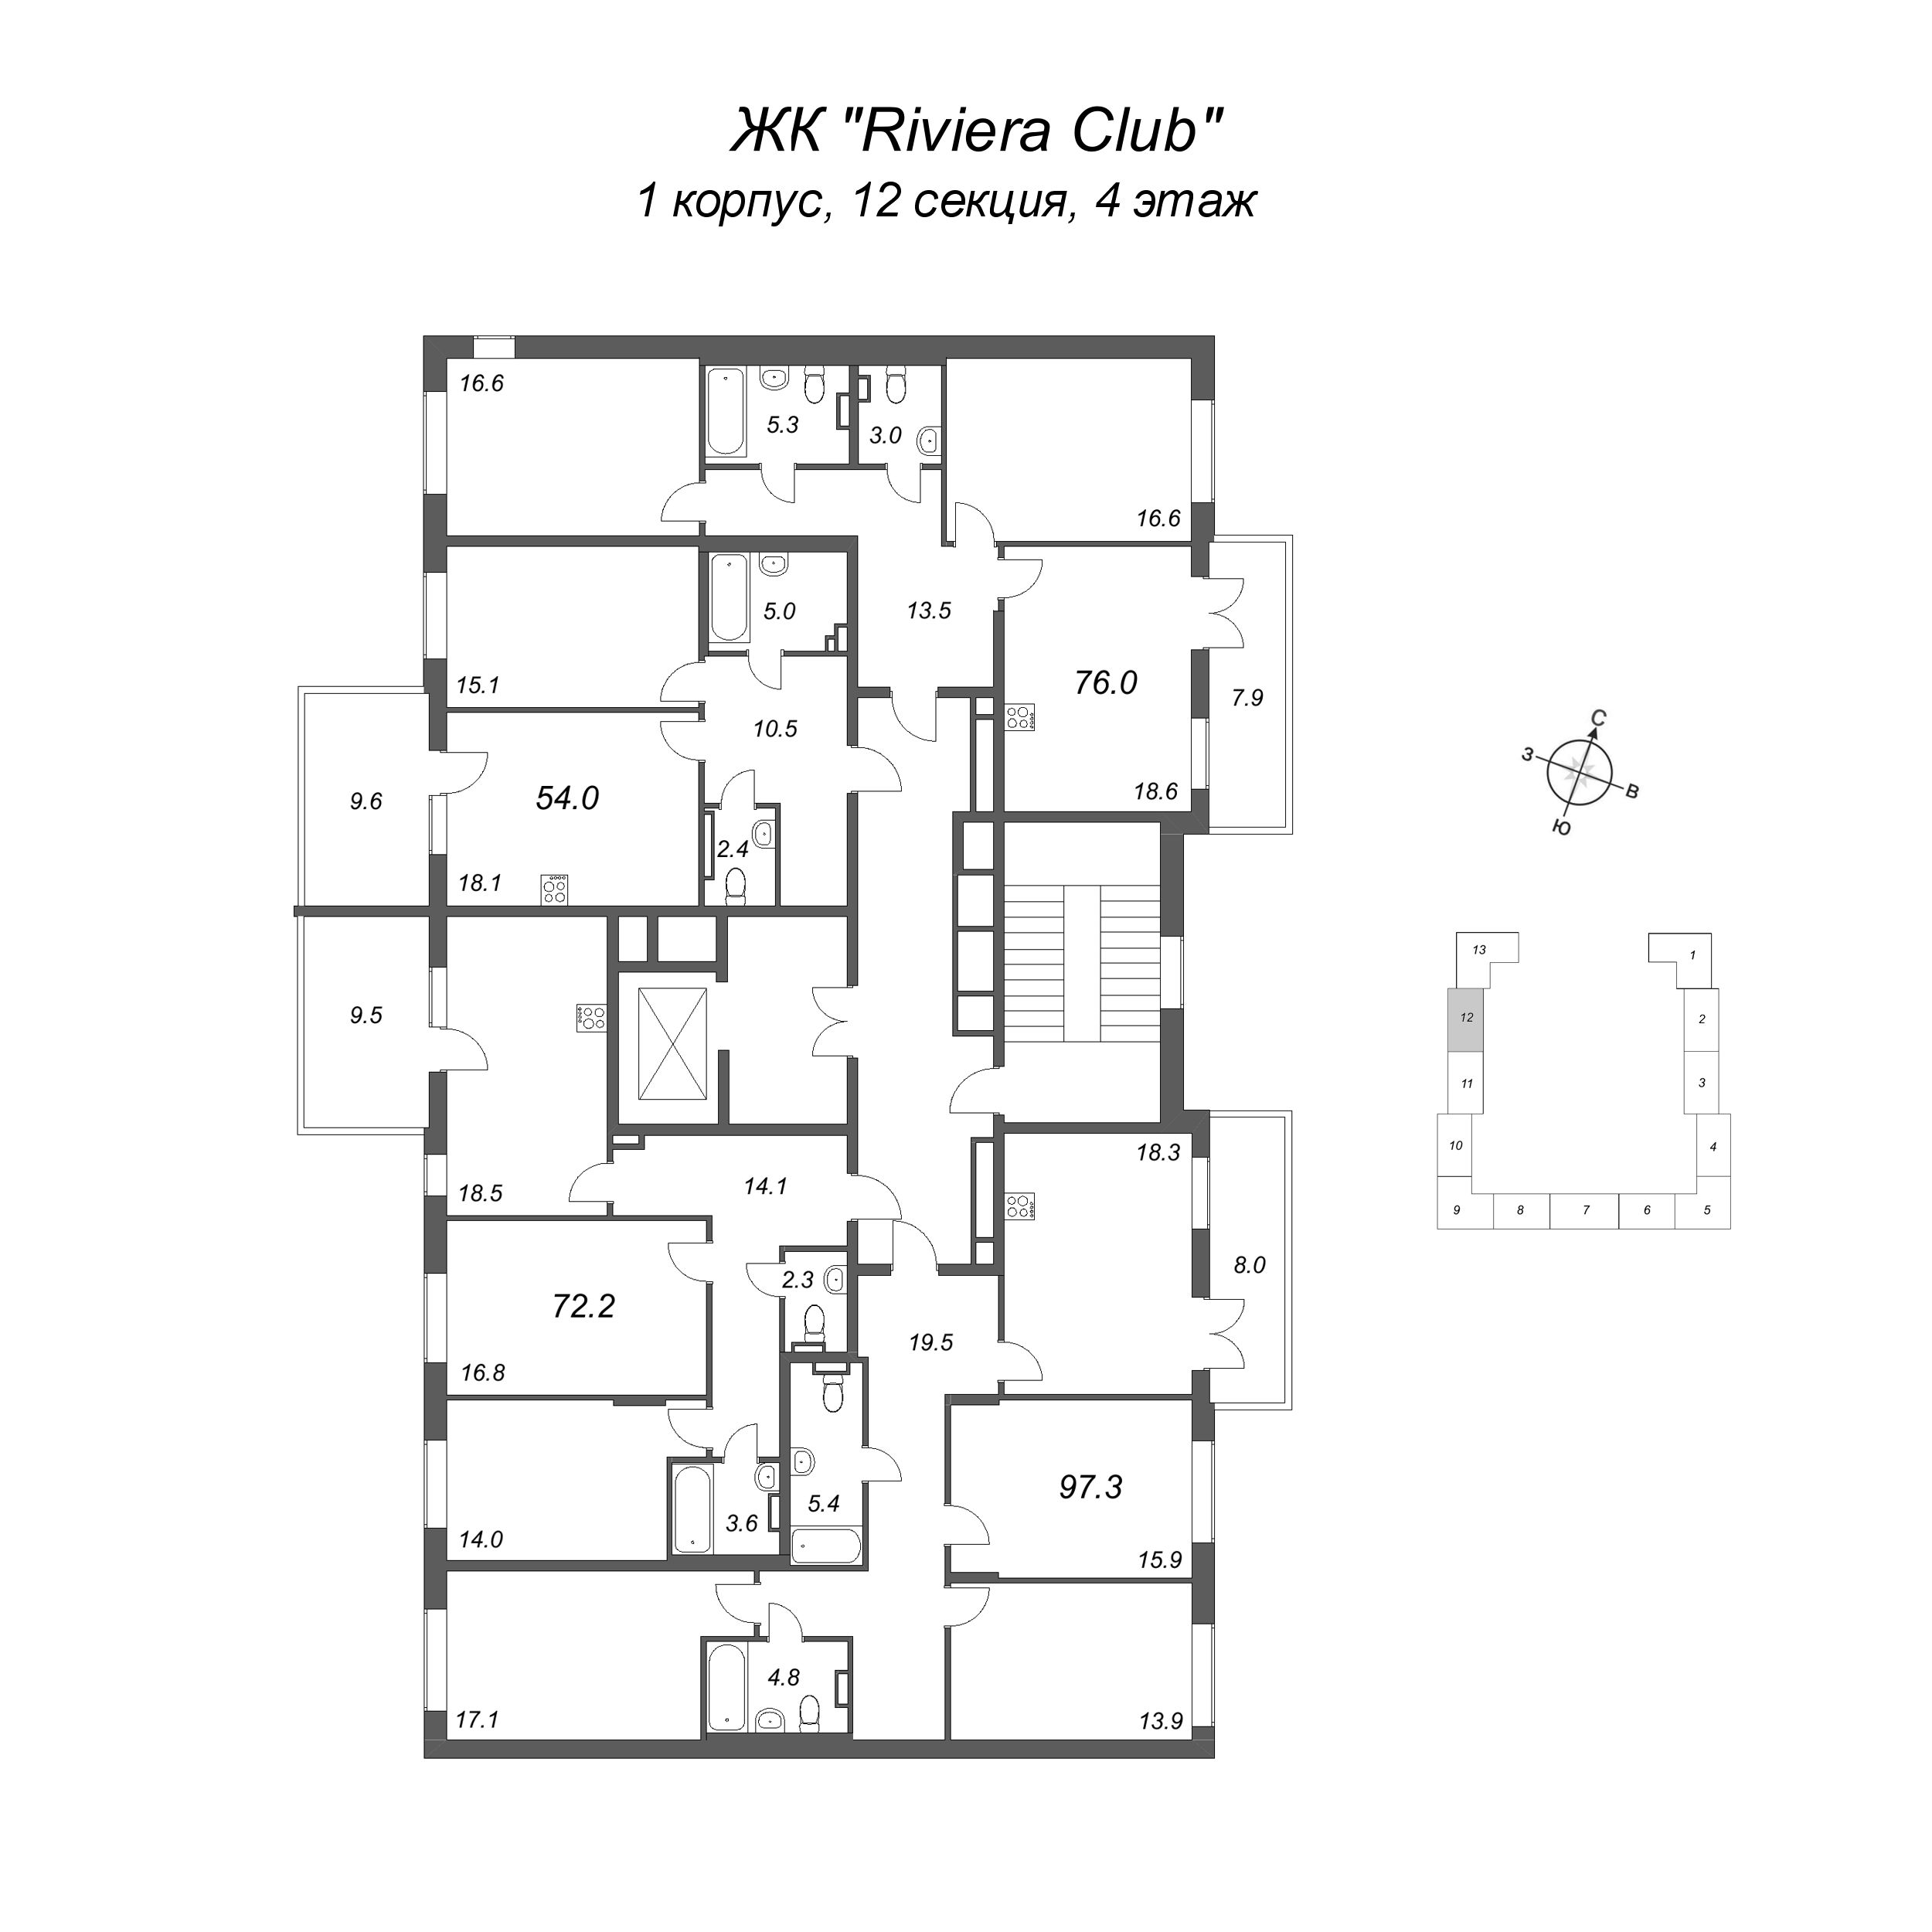 3-комнатная (Евро) квартира, 72.2 м² в ЖК "Riviera Club" - планировка этажа